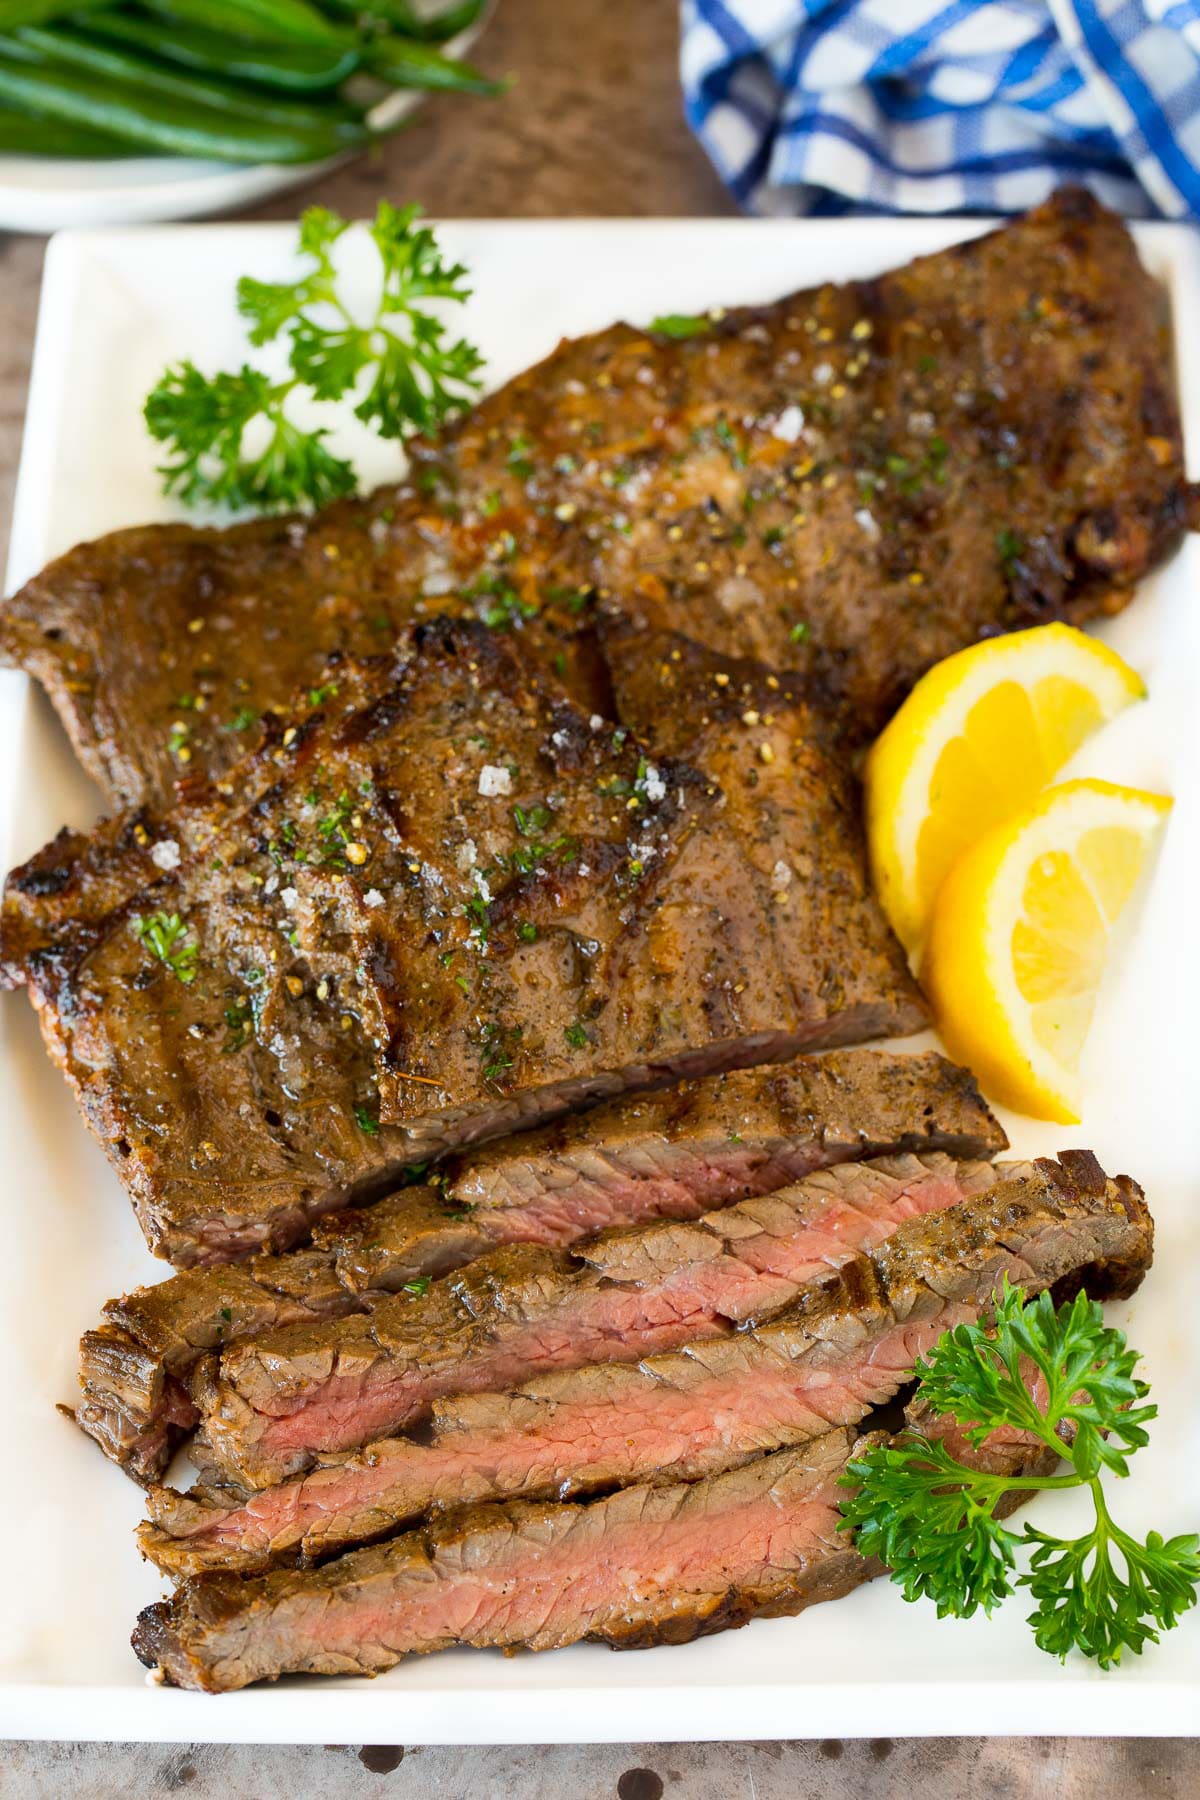 Steak coated in skirt steak marinade, grilled and sliced on a platter.